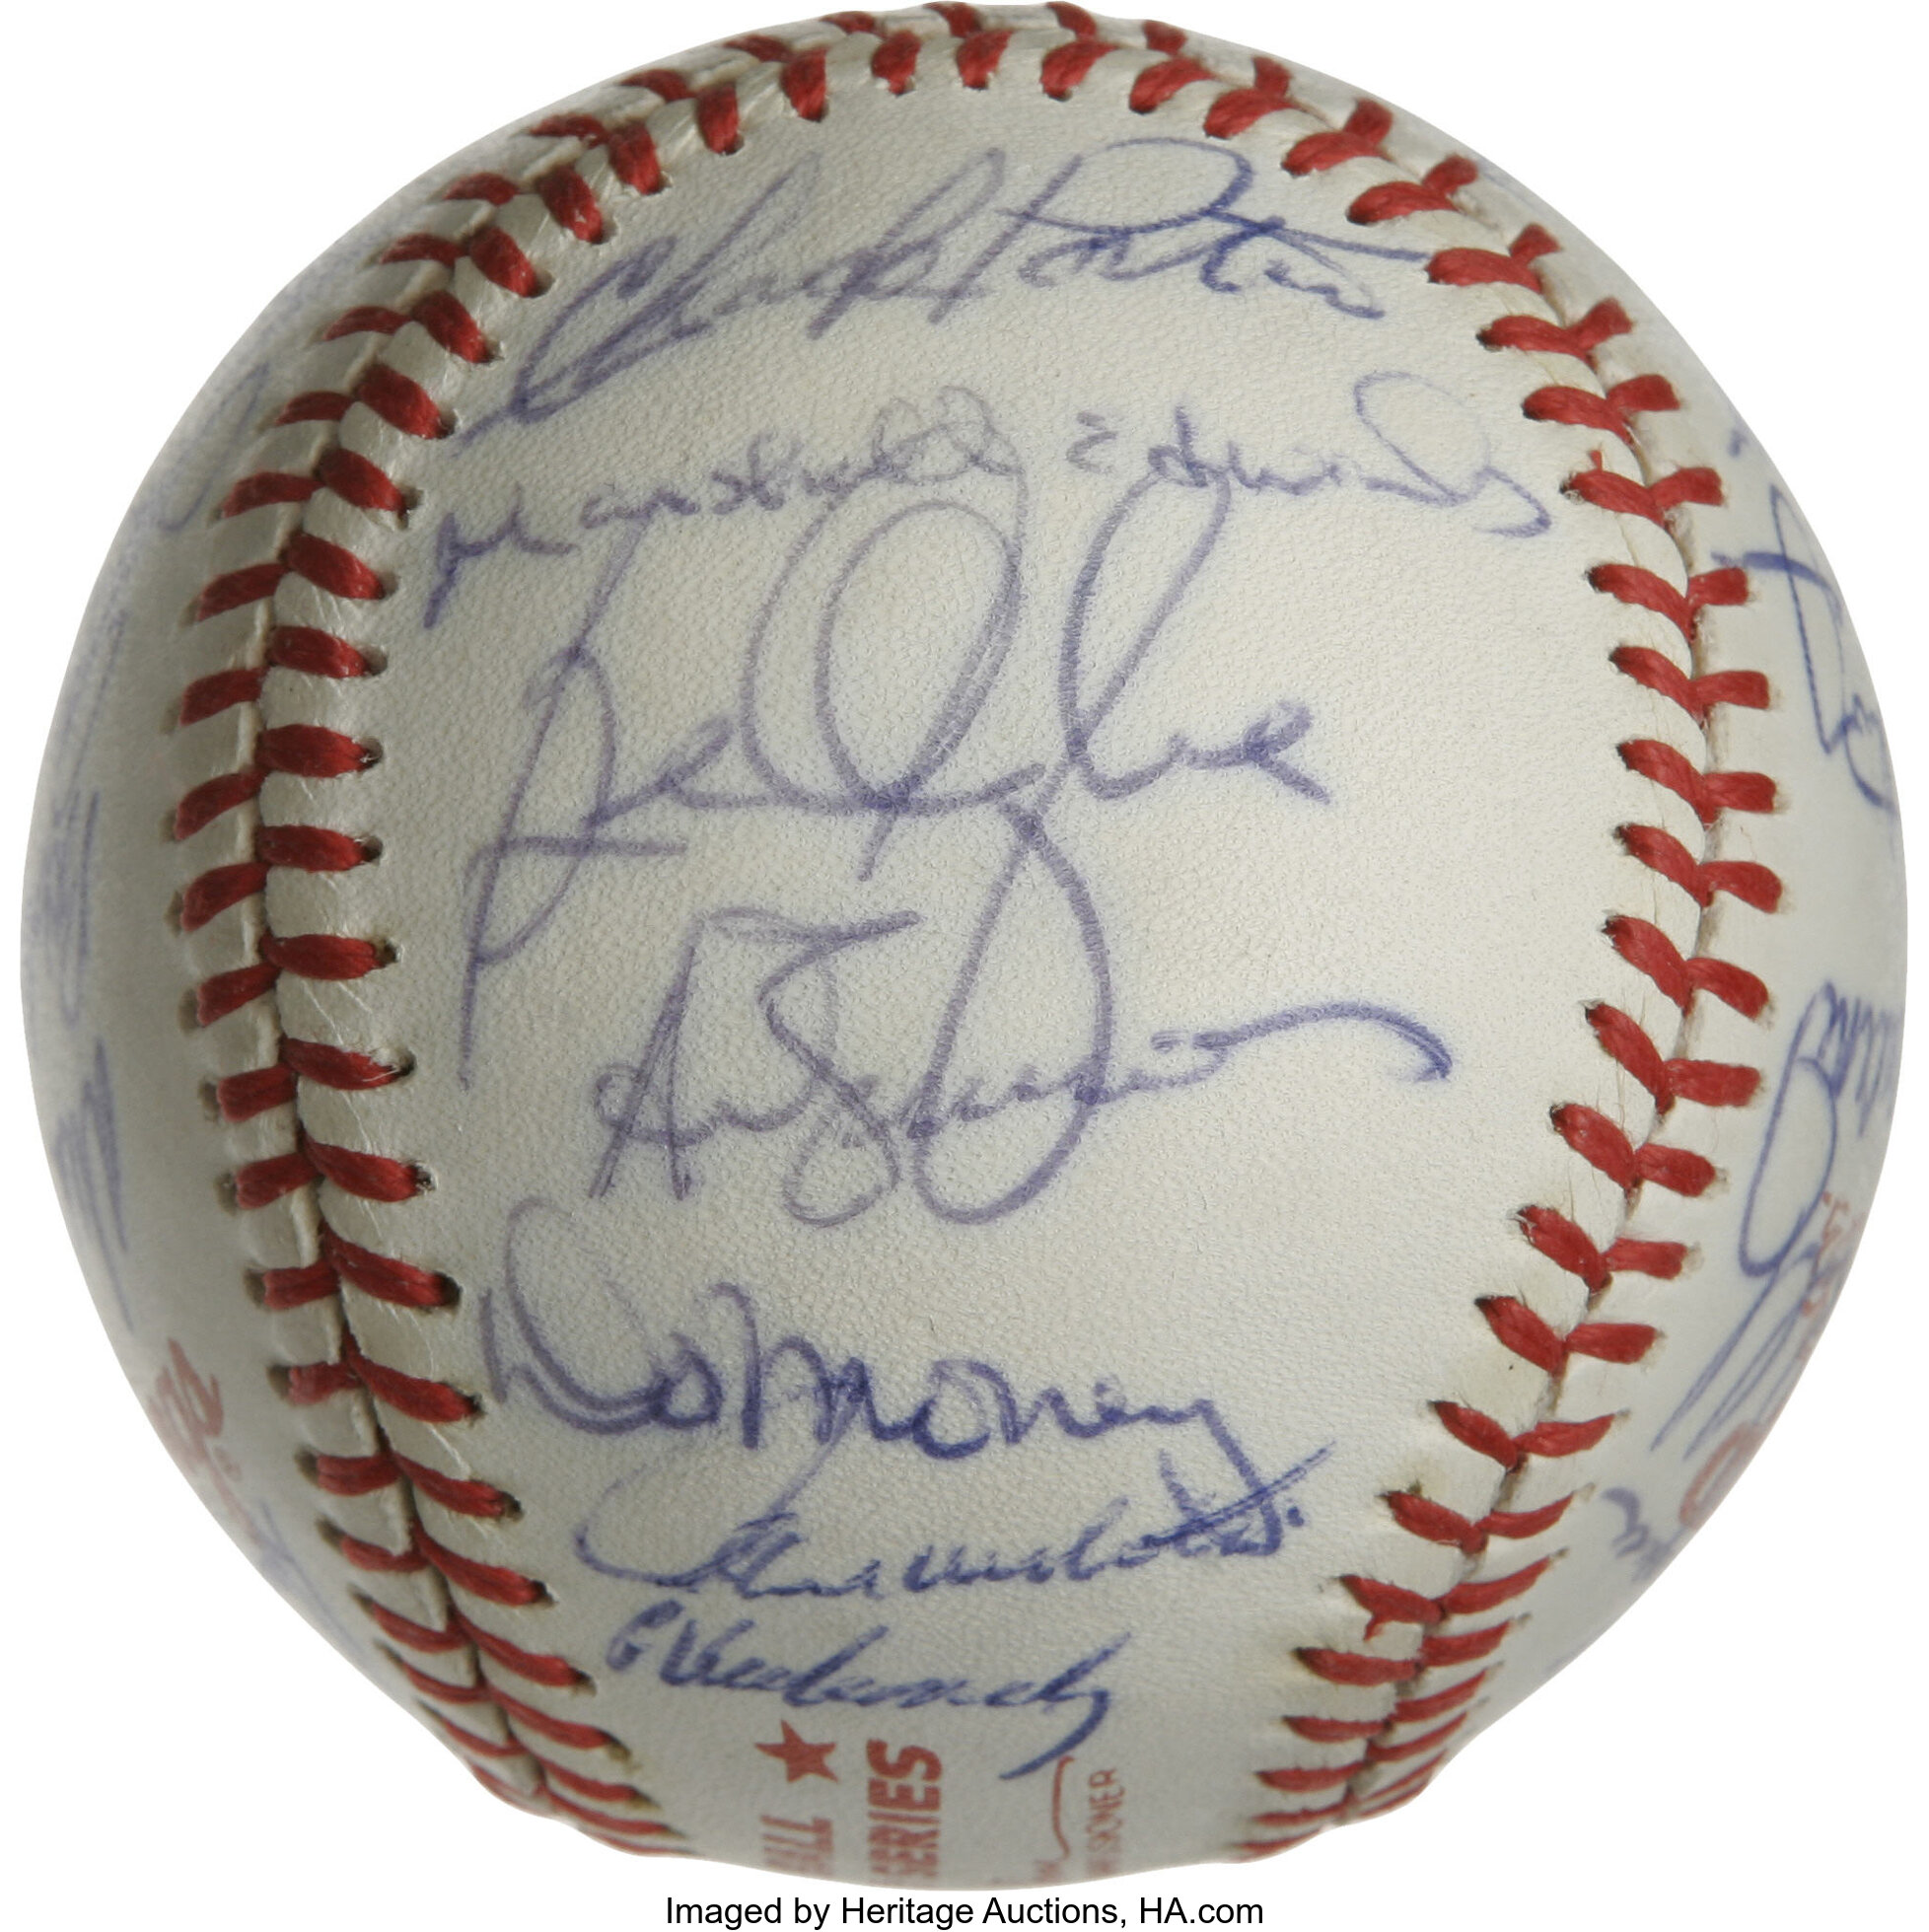 1982 Milwaukee Brewers Team Signed World Series Baseball. The 1982